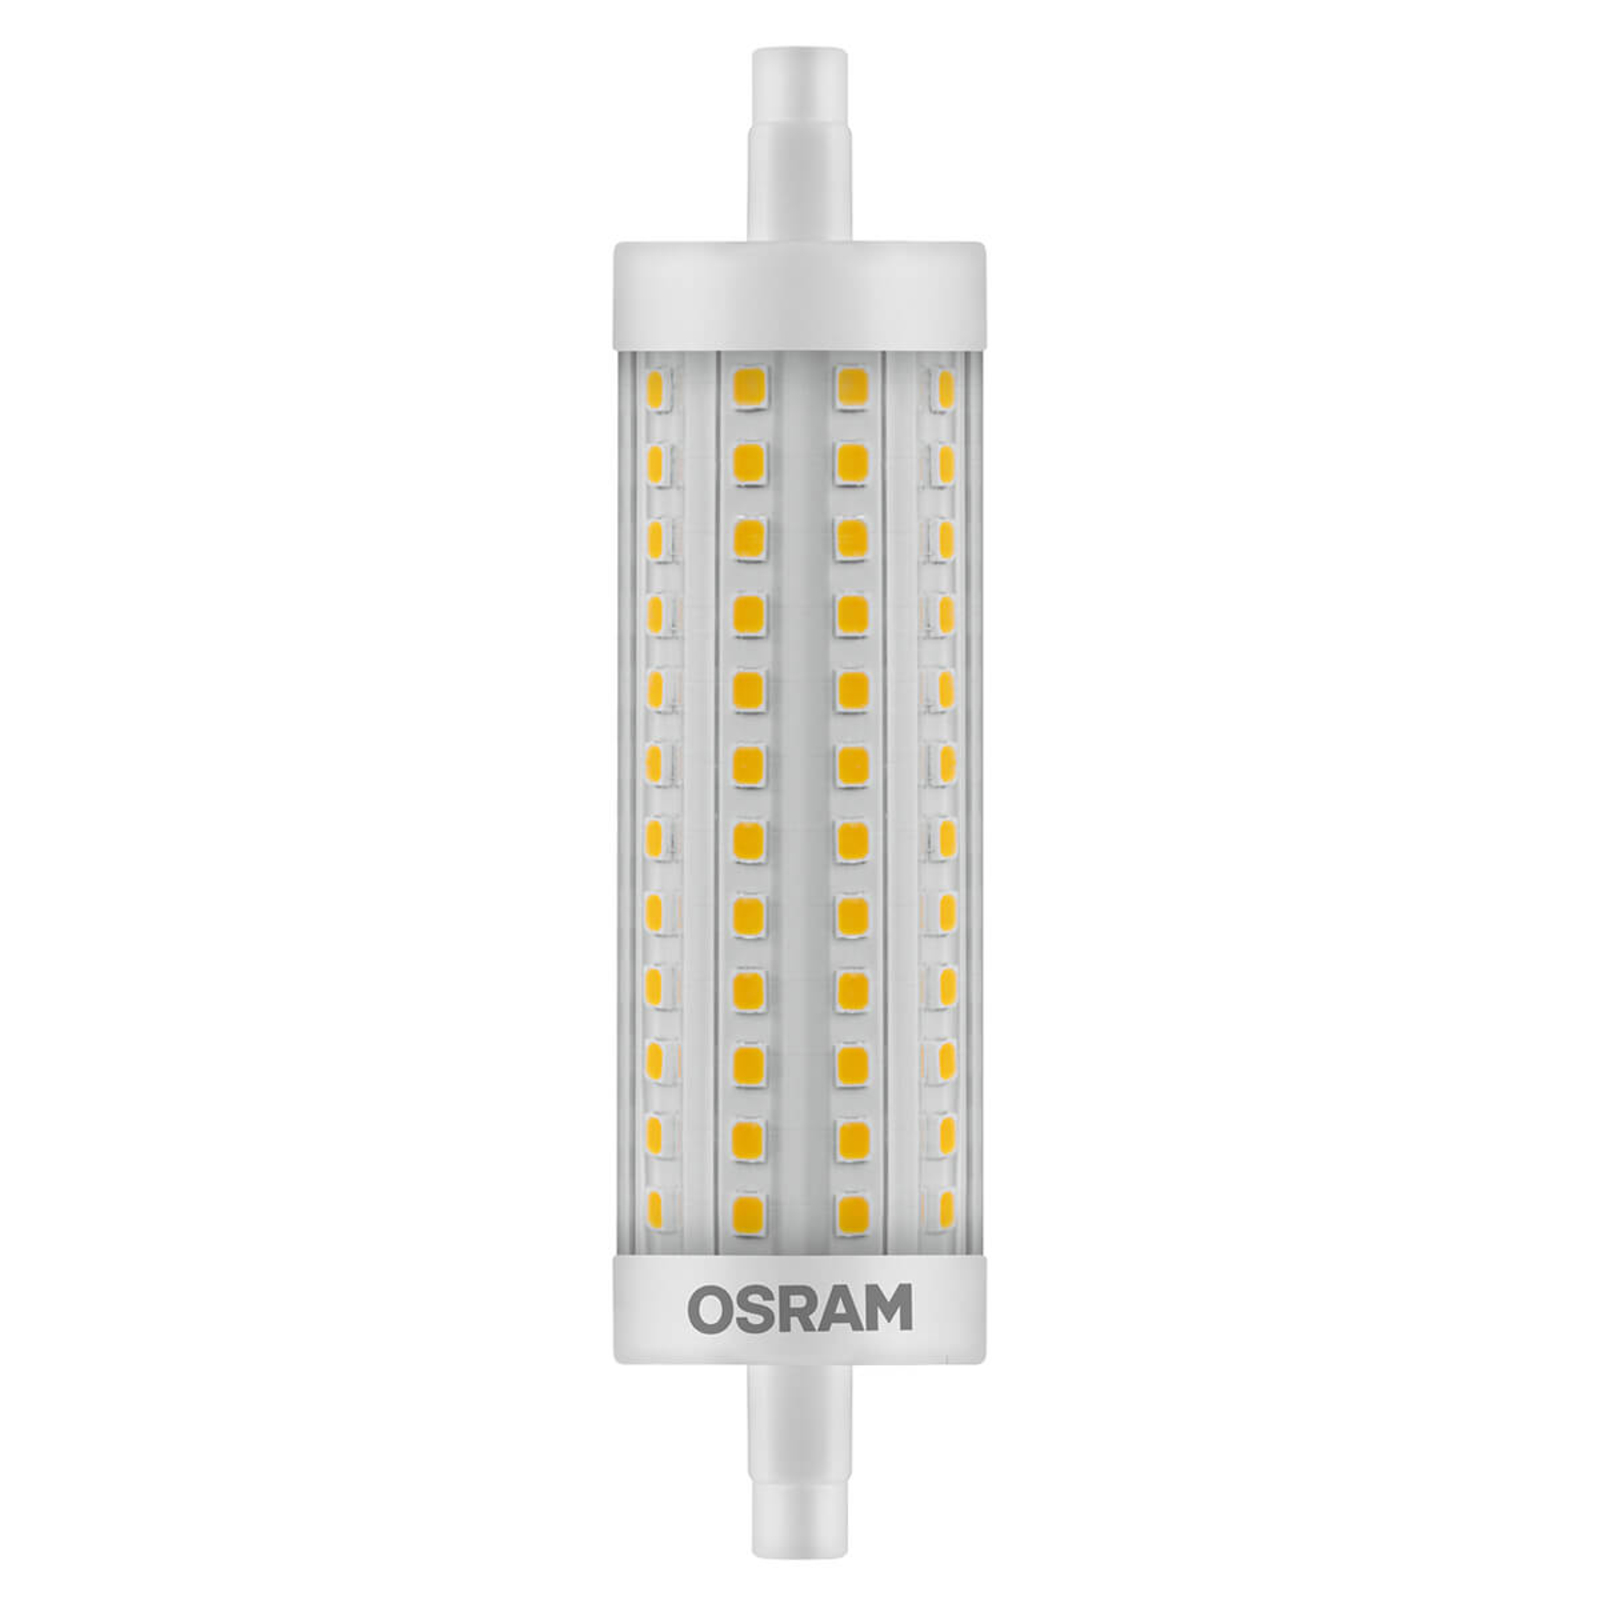 OSRAM LED-stav R7s 16 W varmhvit 2 000 lm